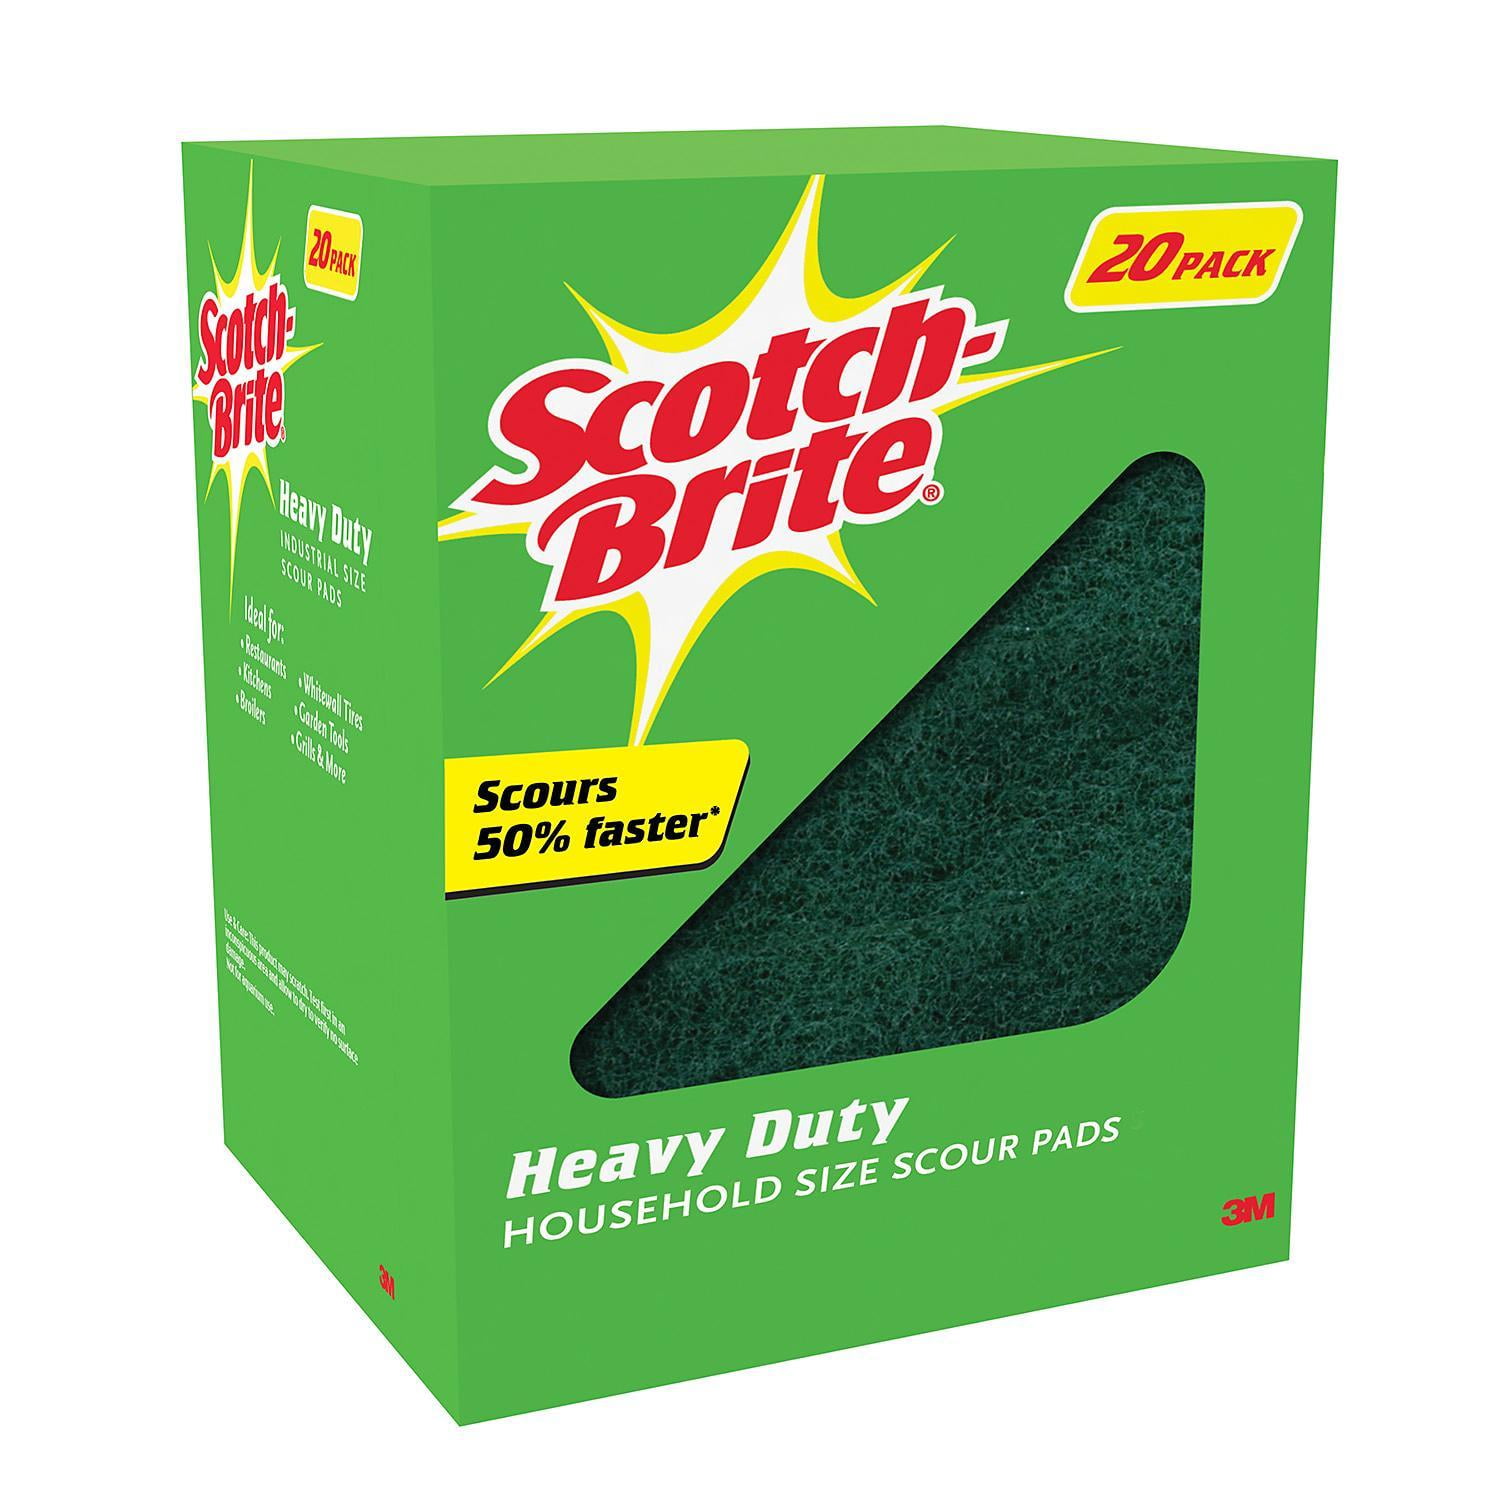 Scotch-Brite Heavy Duty Industrial Sized Scour Pads (20ct.) - Sam's Club